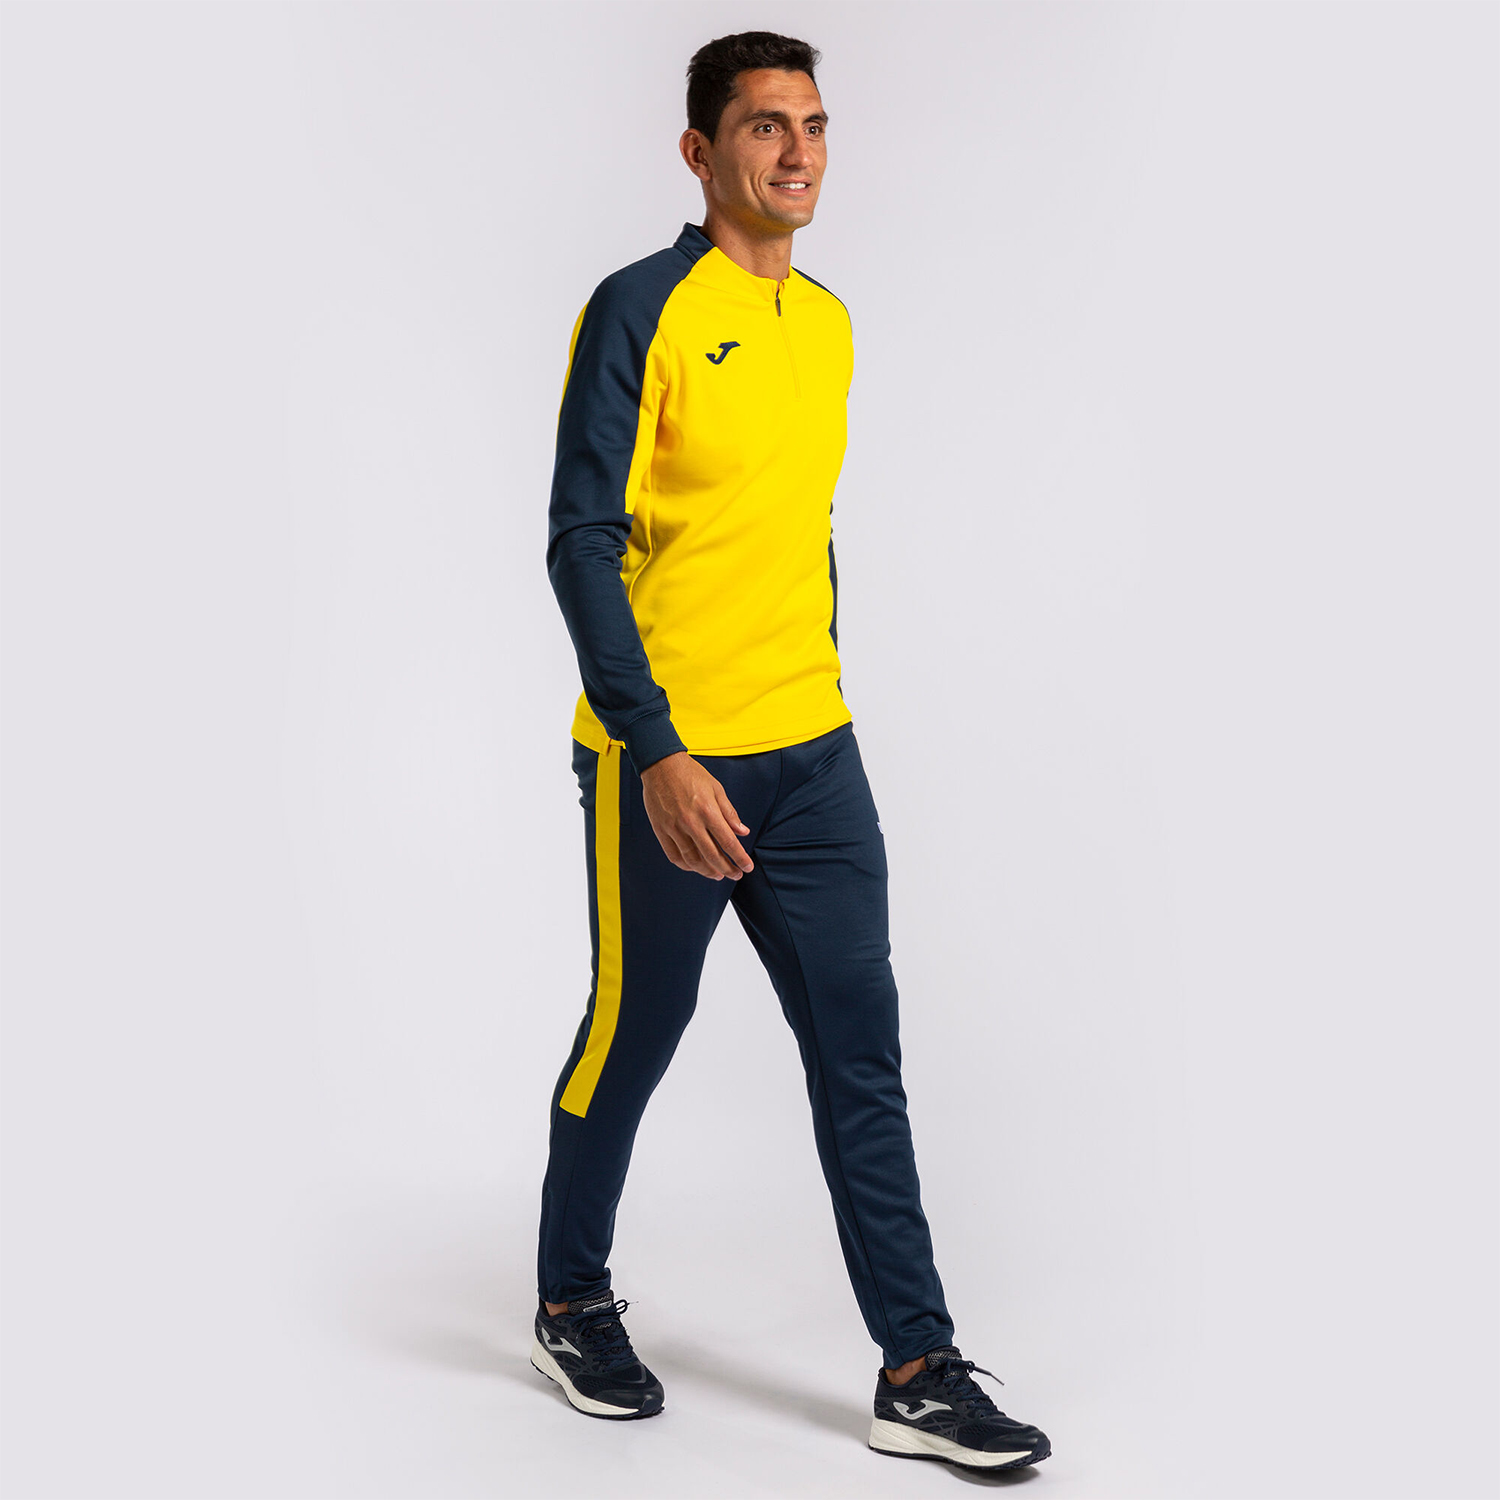 Joma Eco Championship Camisa - Yellow/Navy